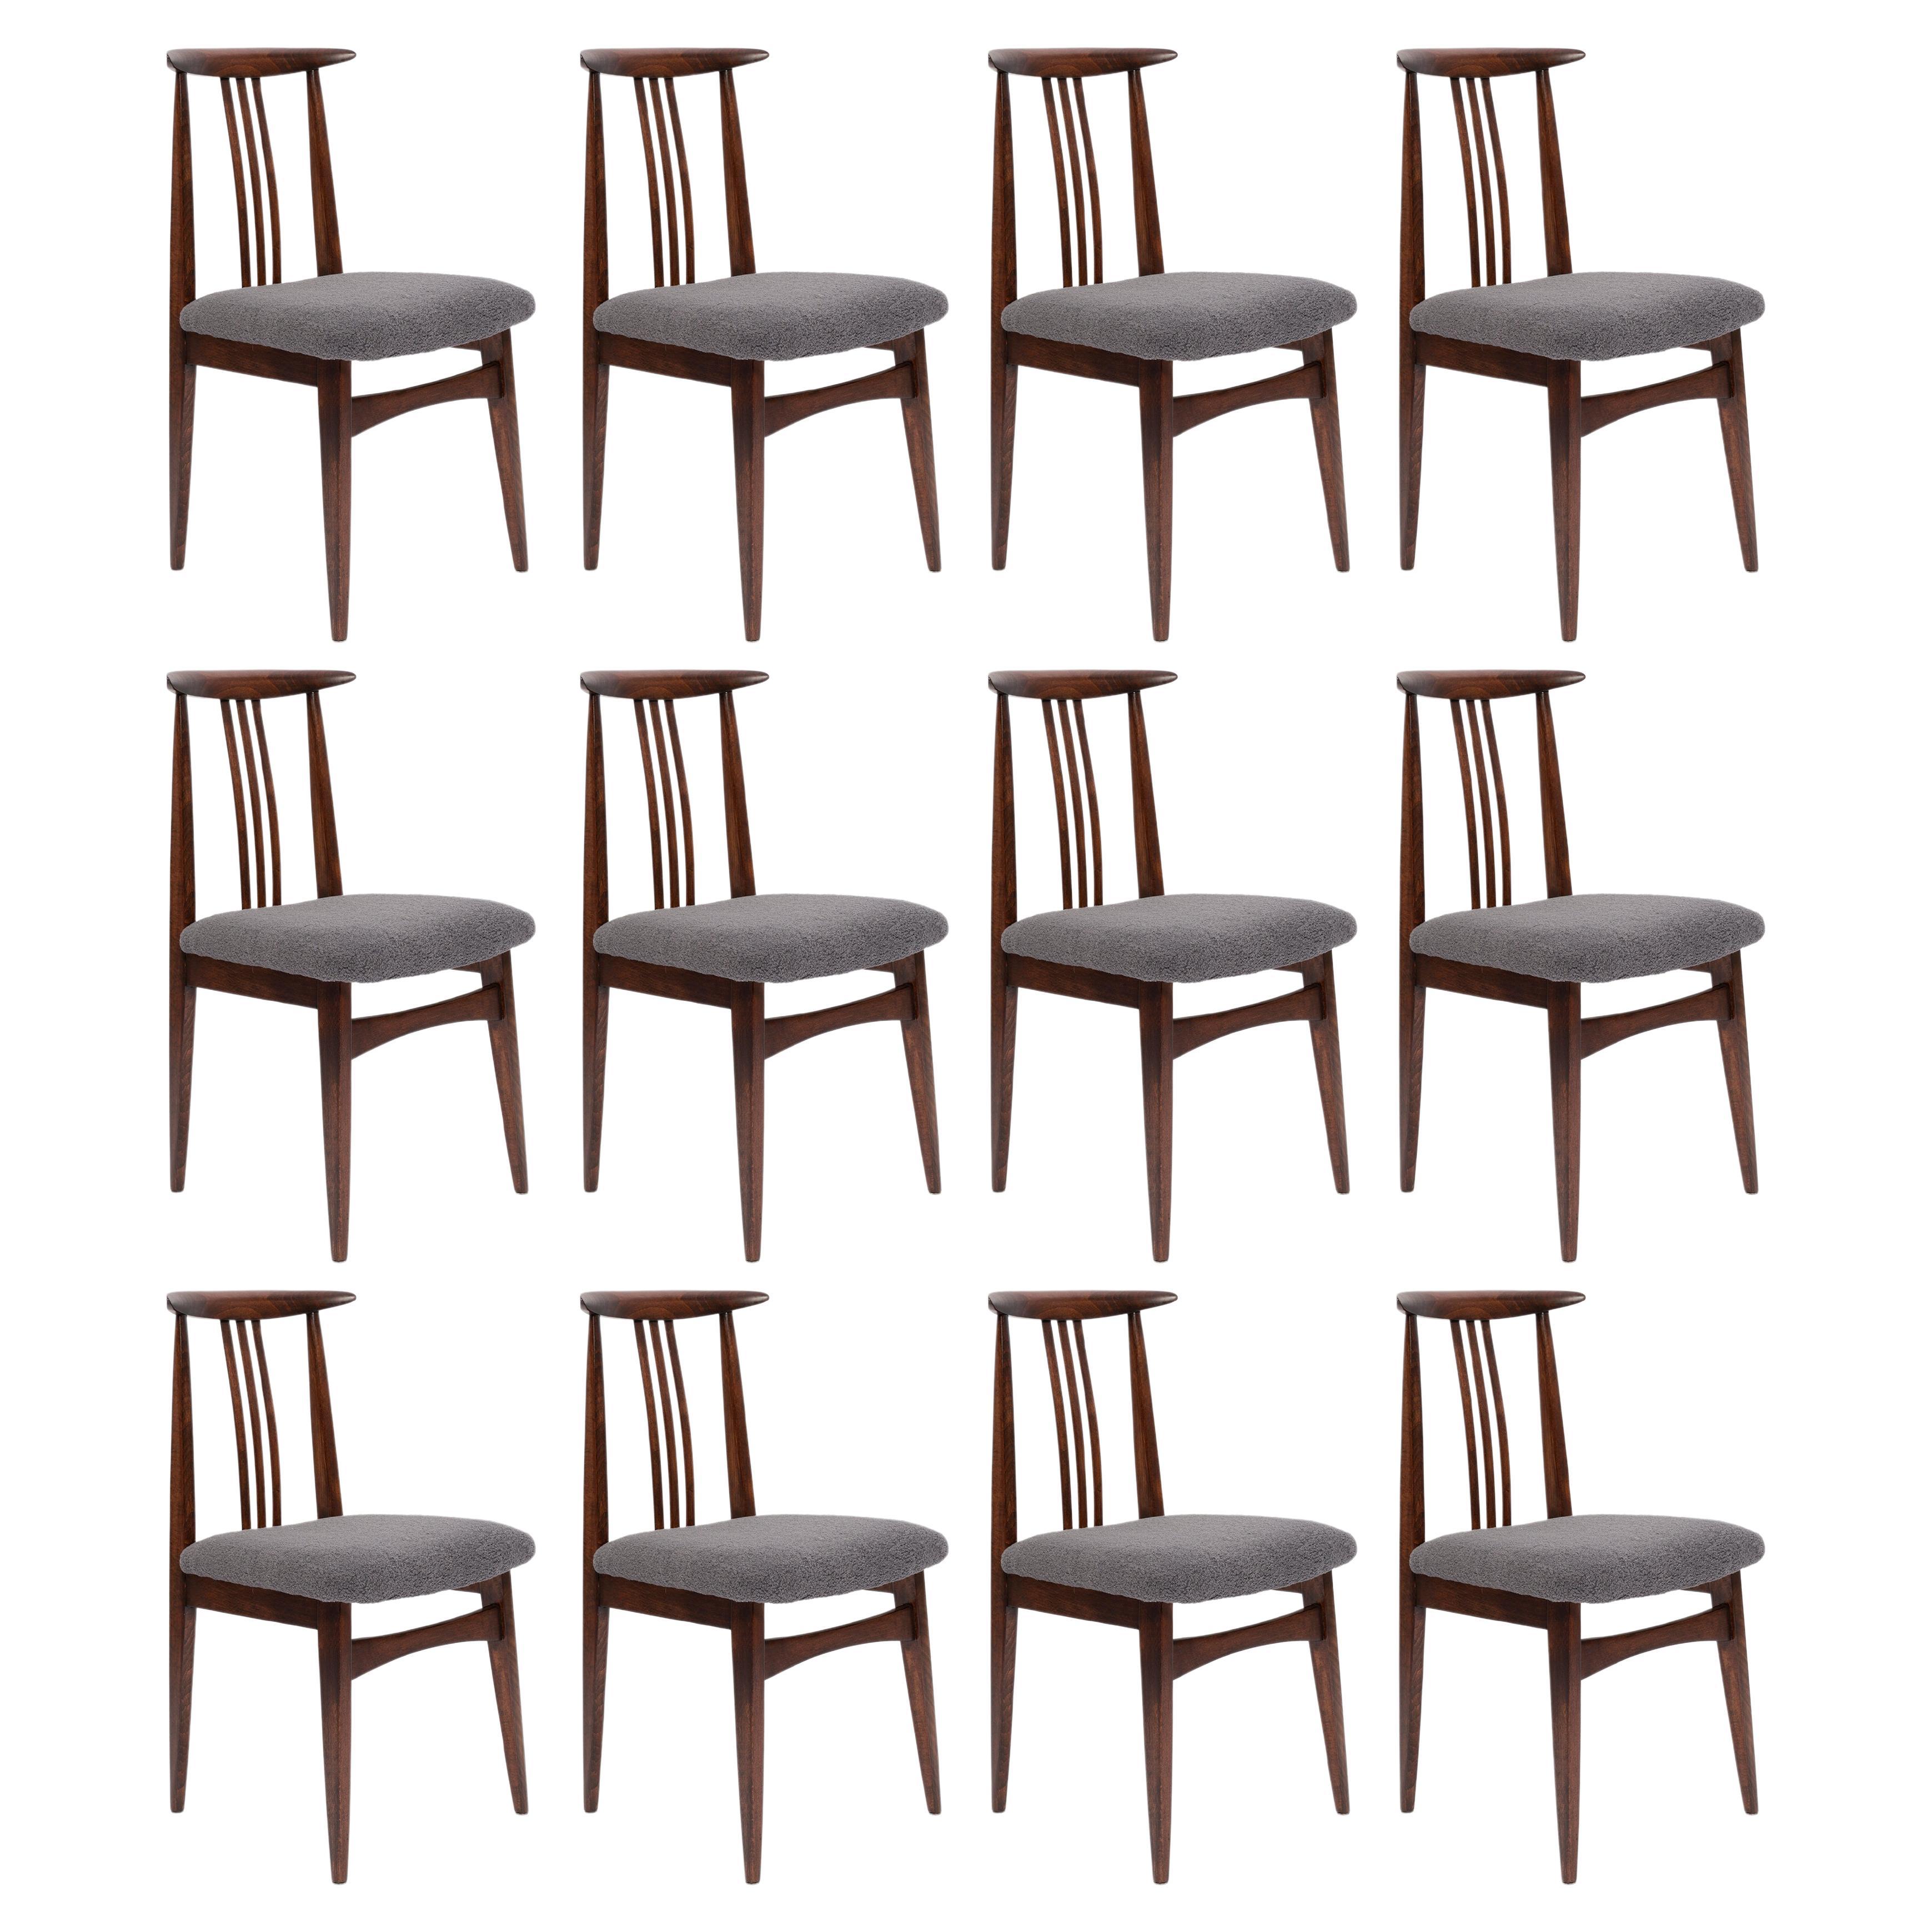 Twelve Mid-Century Graphite Boucle Chairs, Walnut Wood, M Zielinski, Europe 1960